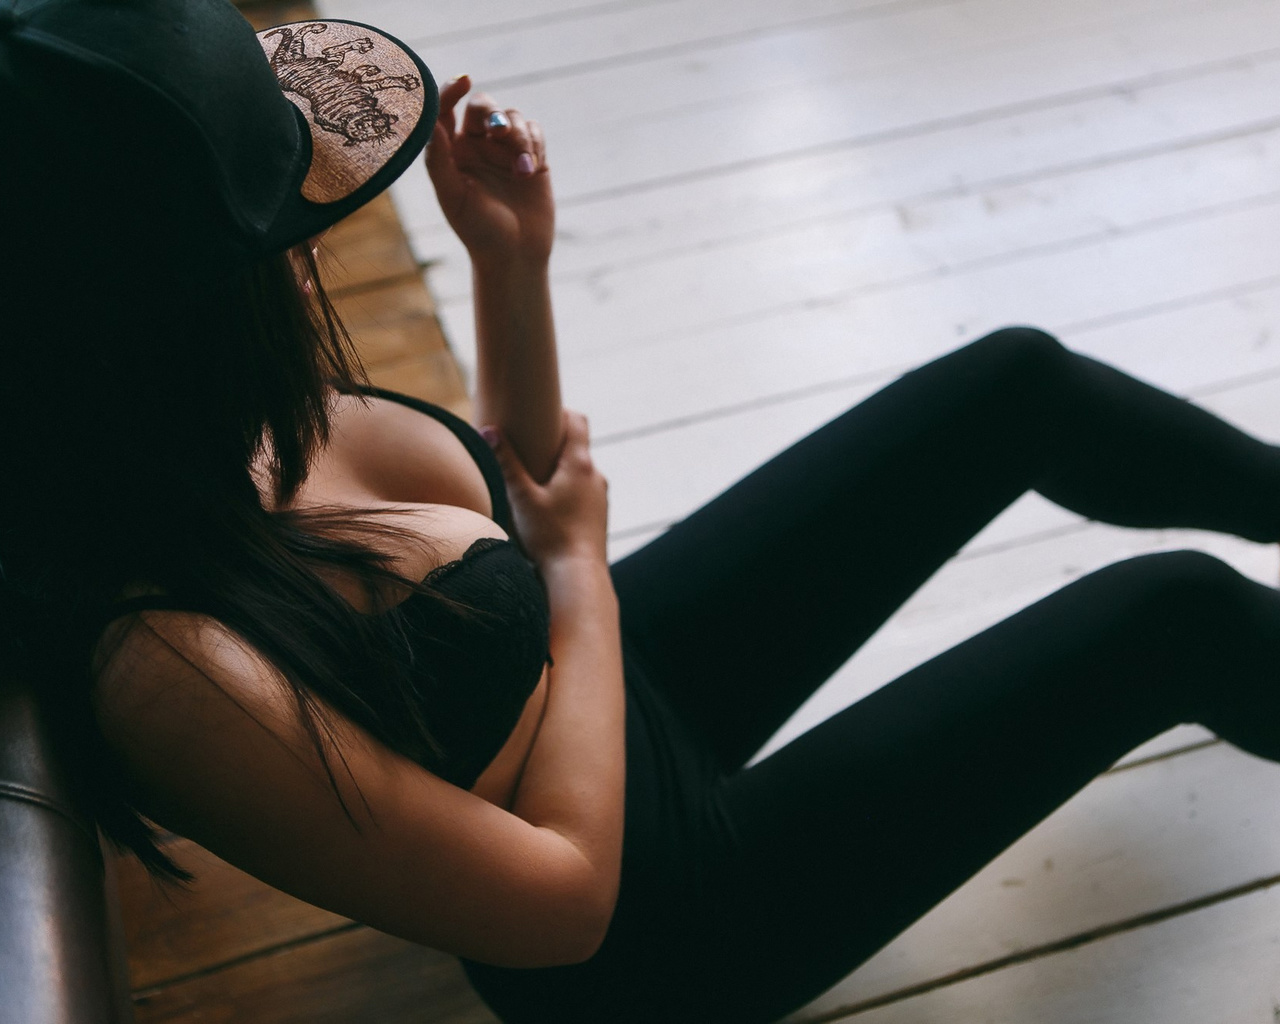 women, tanned, sitting, baseball caps, black bras, yoga pants